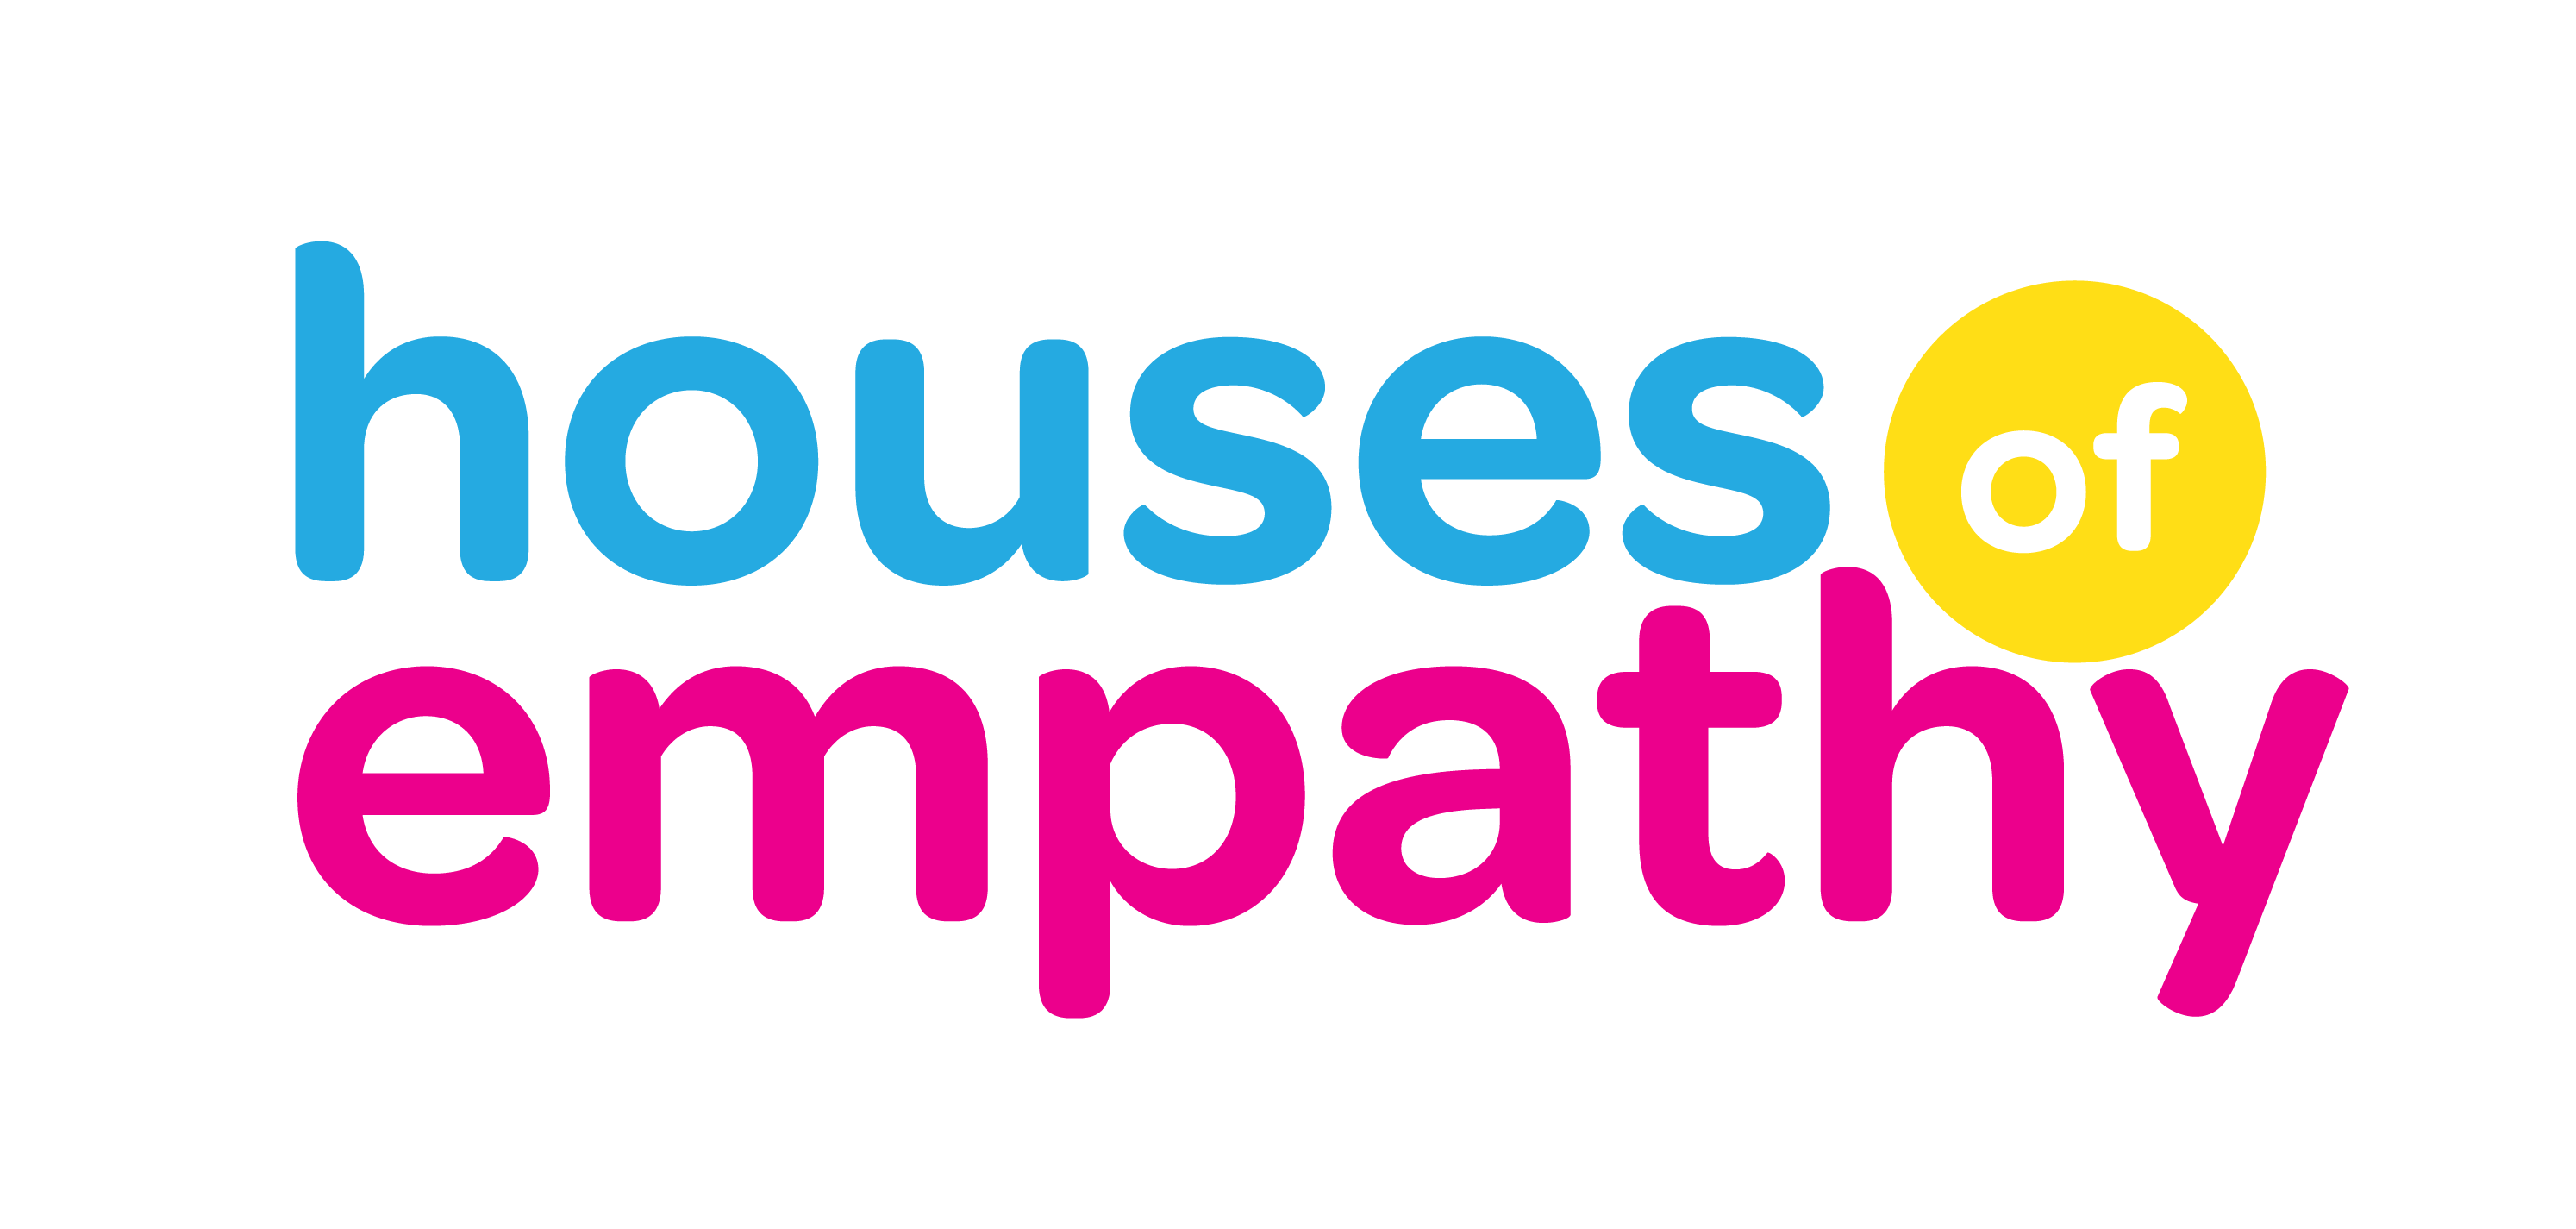 Houses of Empathy